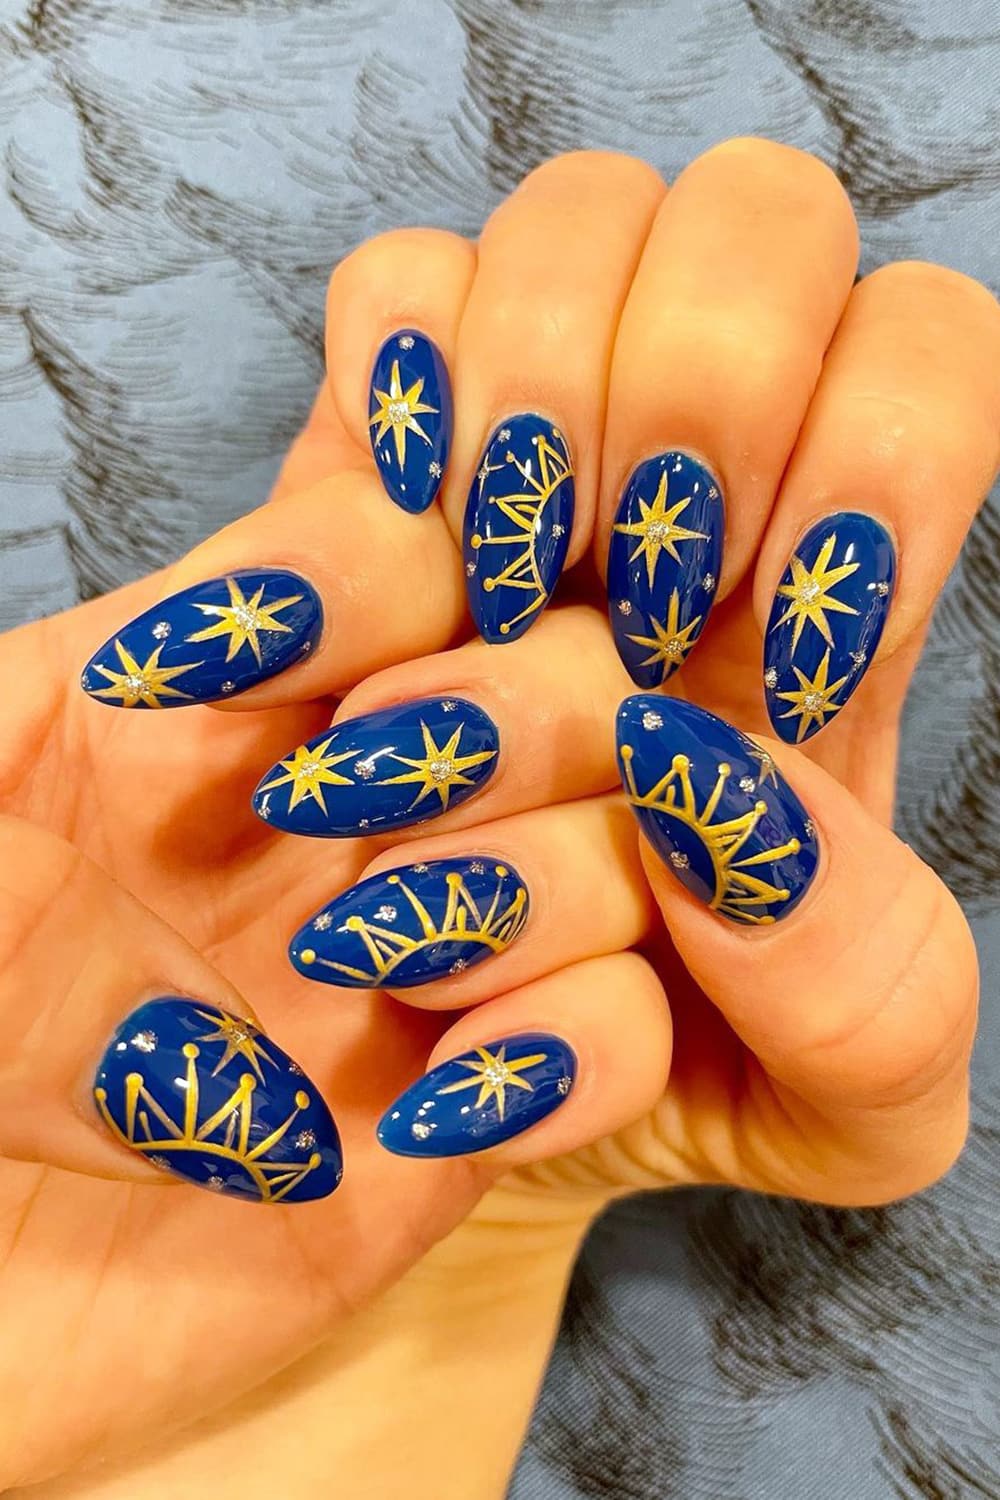 Blue celestial nails with sun